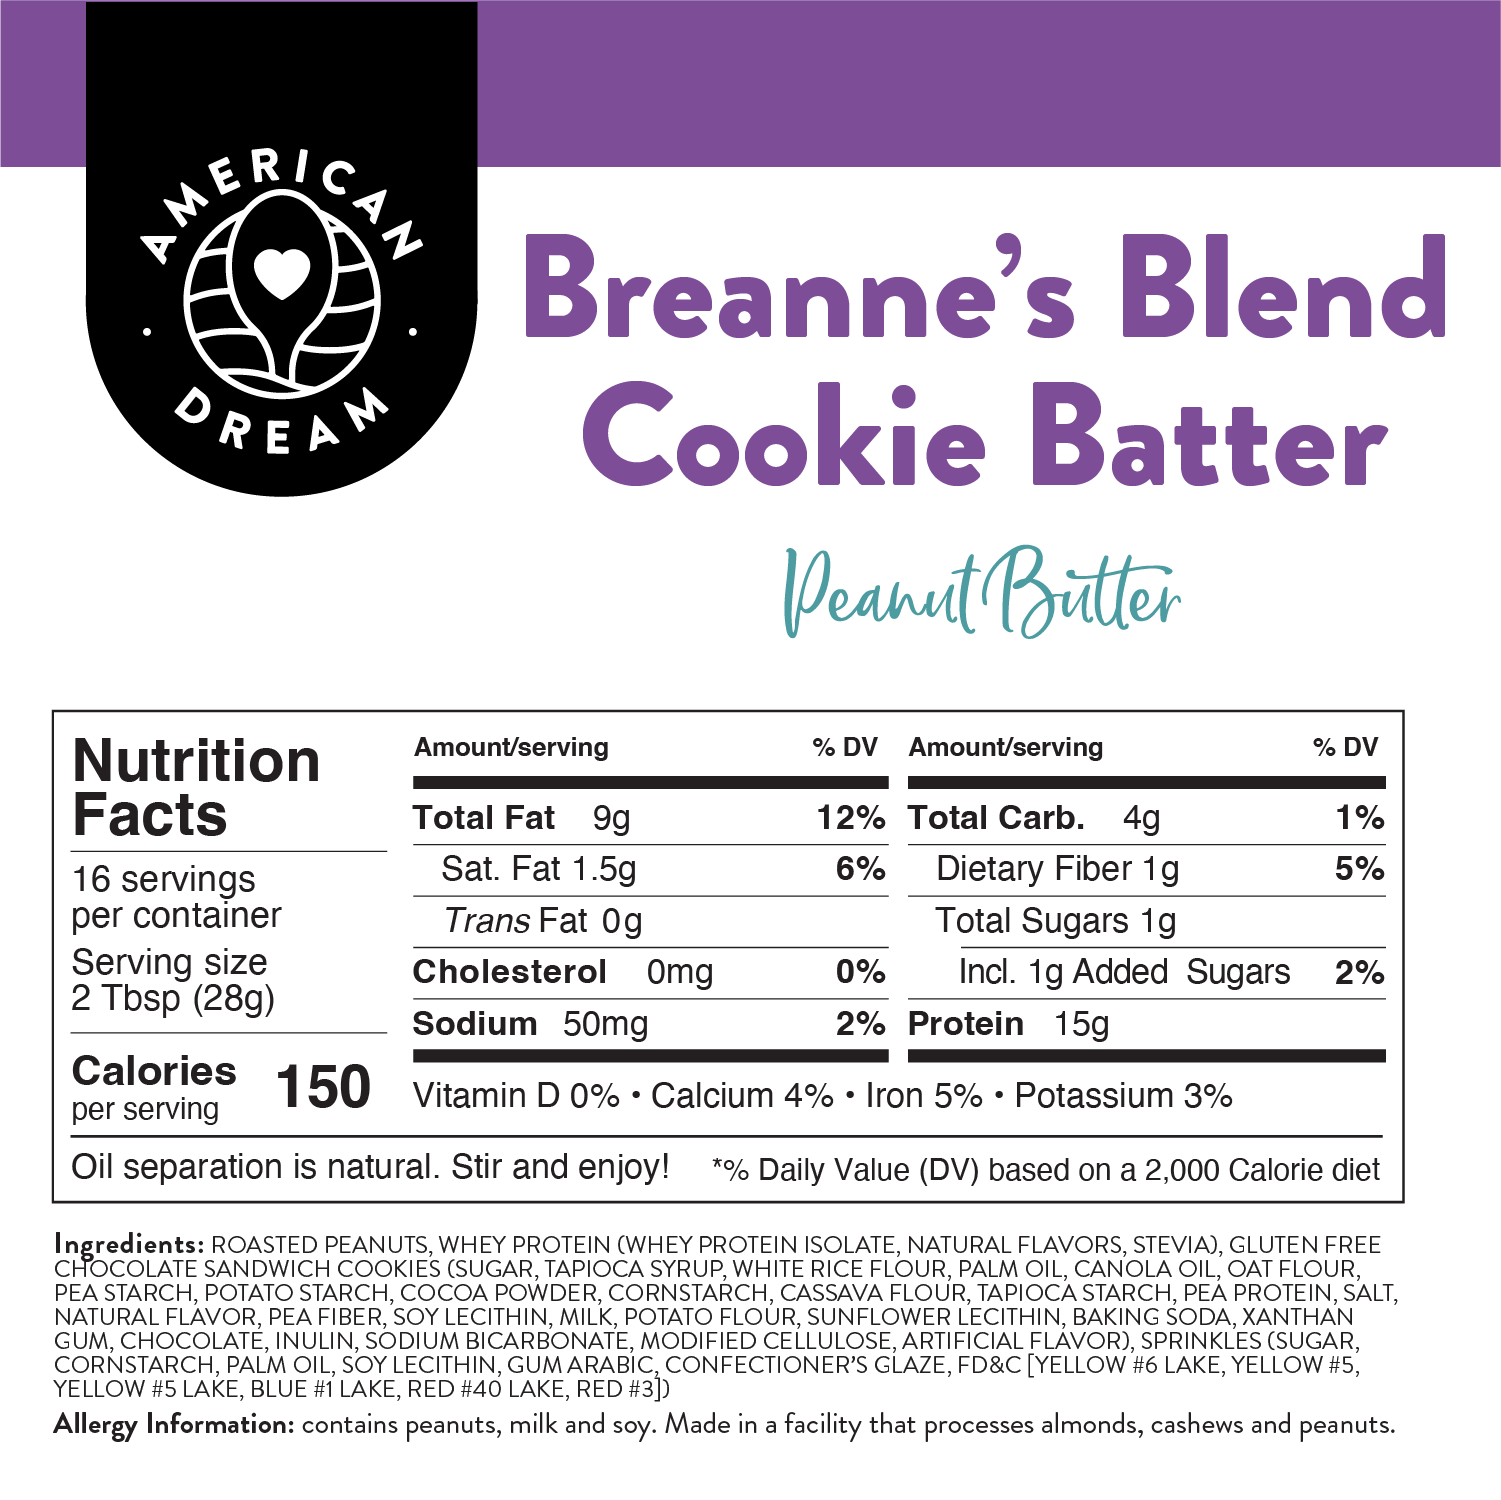 Gluten-Free Breanne’s Blend Cookie Batter Peanut Butter